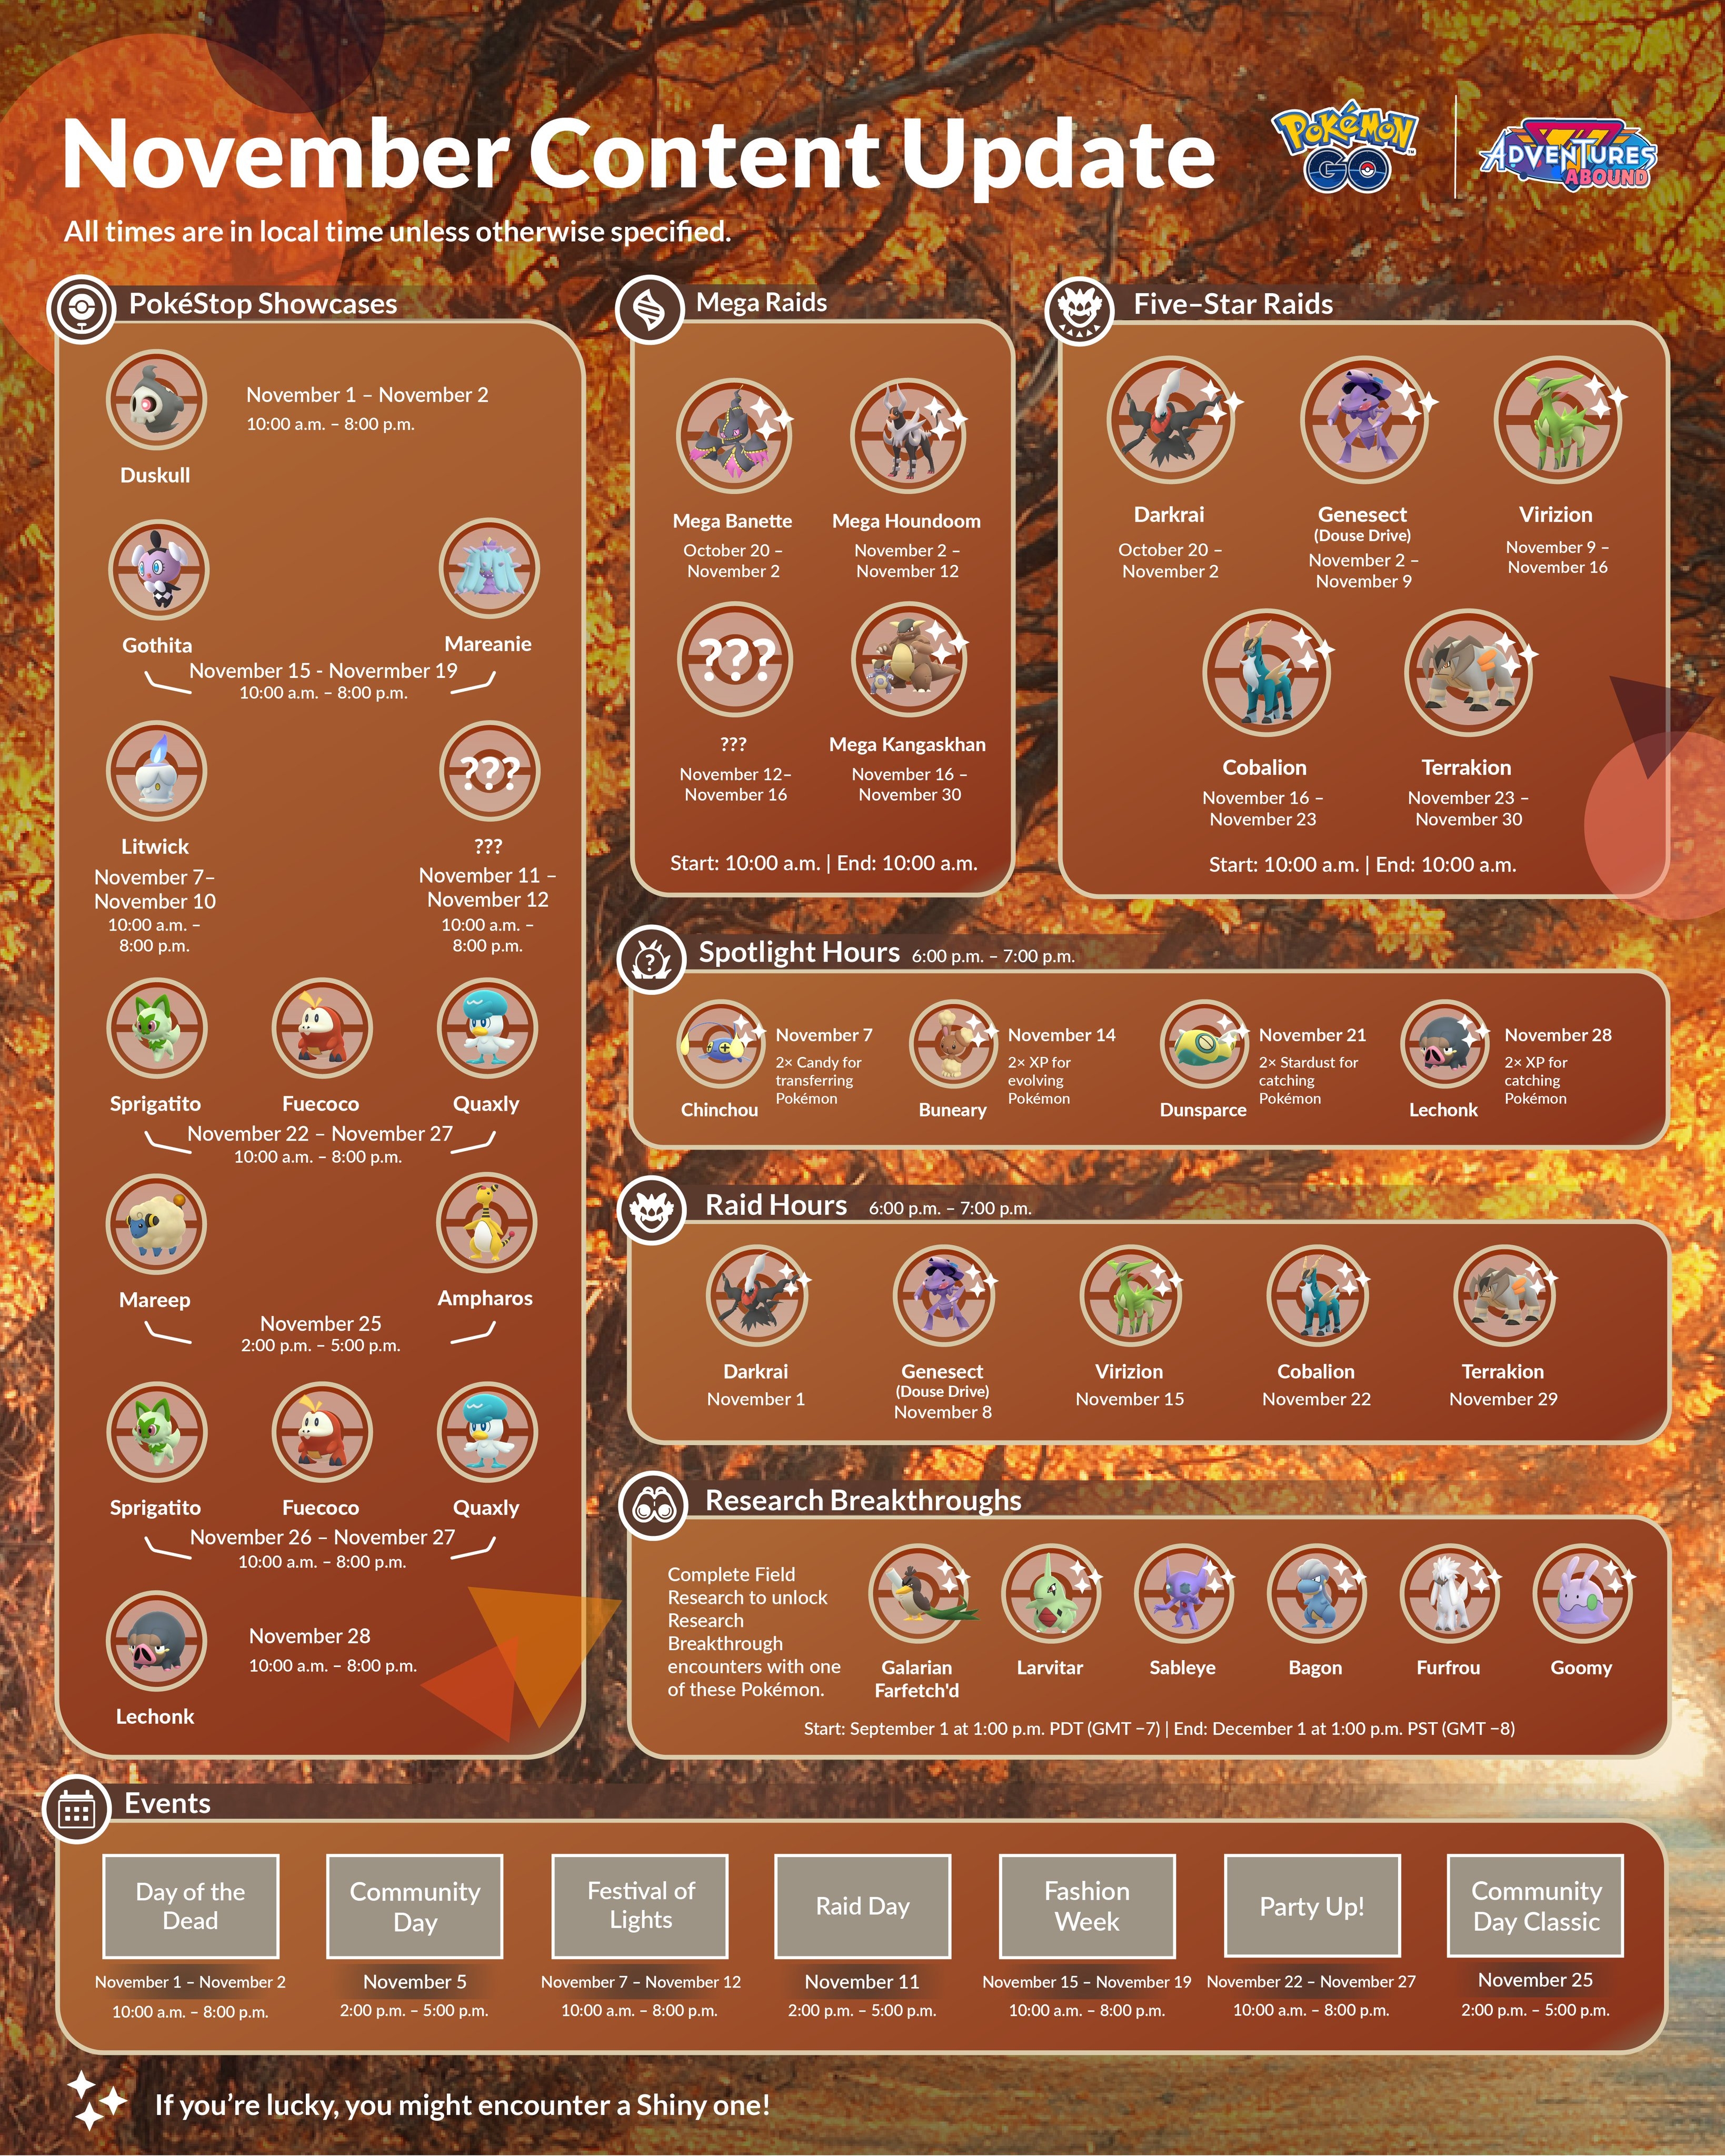 Pokémon GO November Content Update Infographic